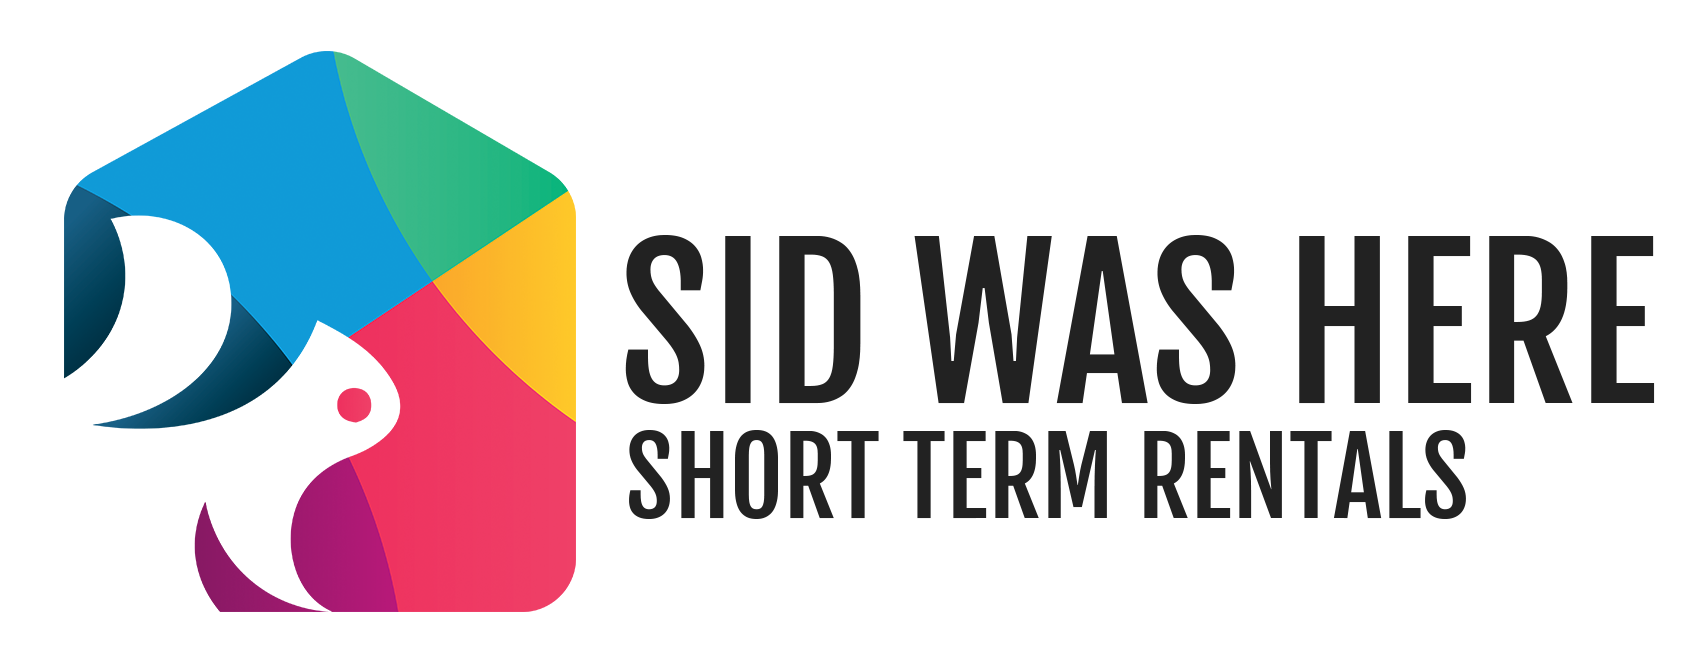 Sid Was Here brand logo